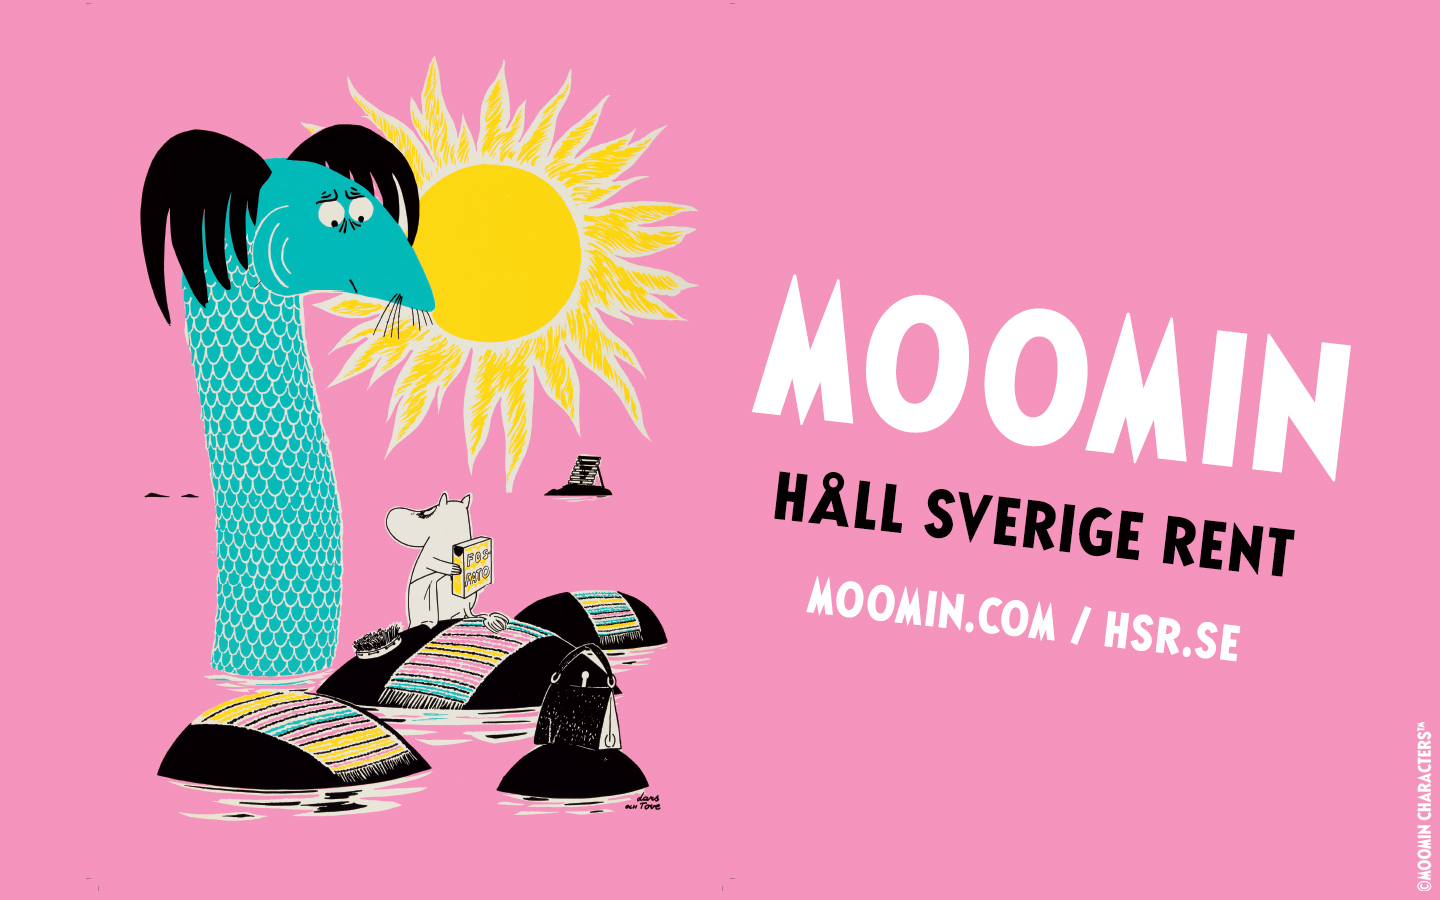 Hall Sverige Rent Keep Sweden Tidy Wallpaper Moomin